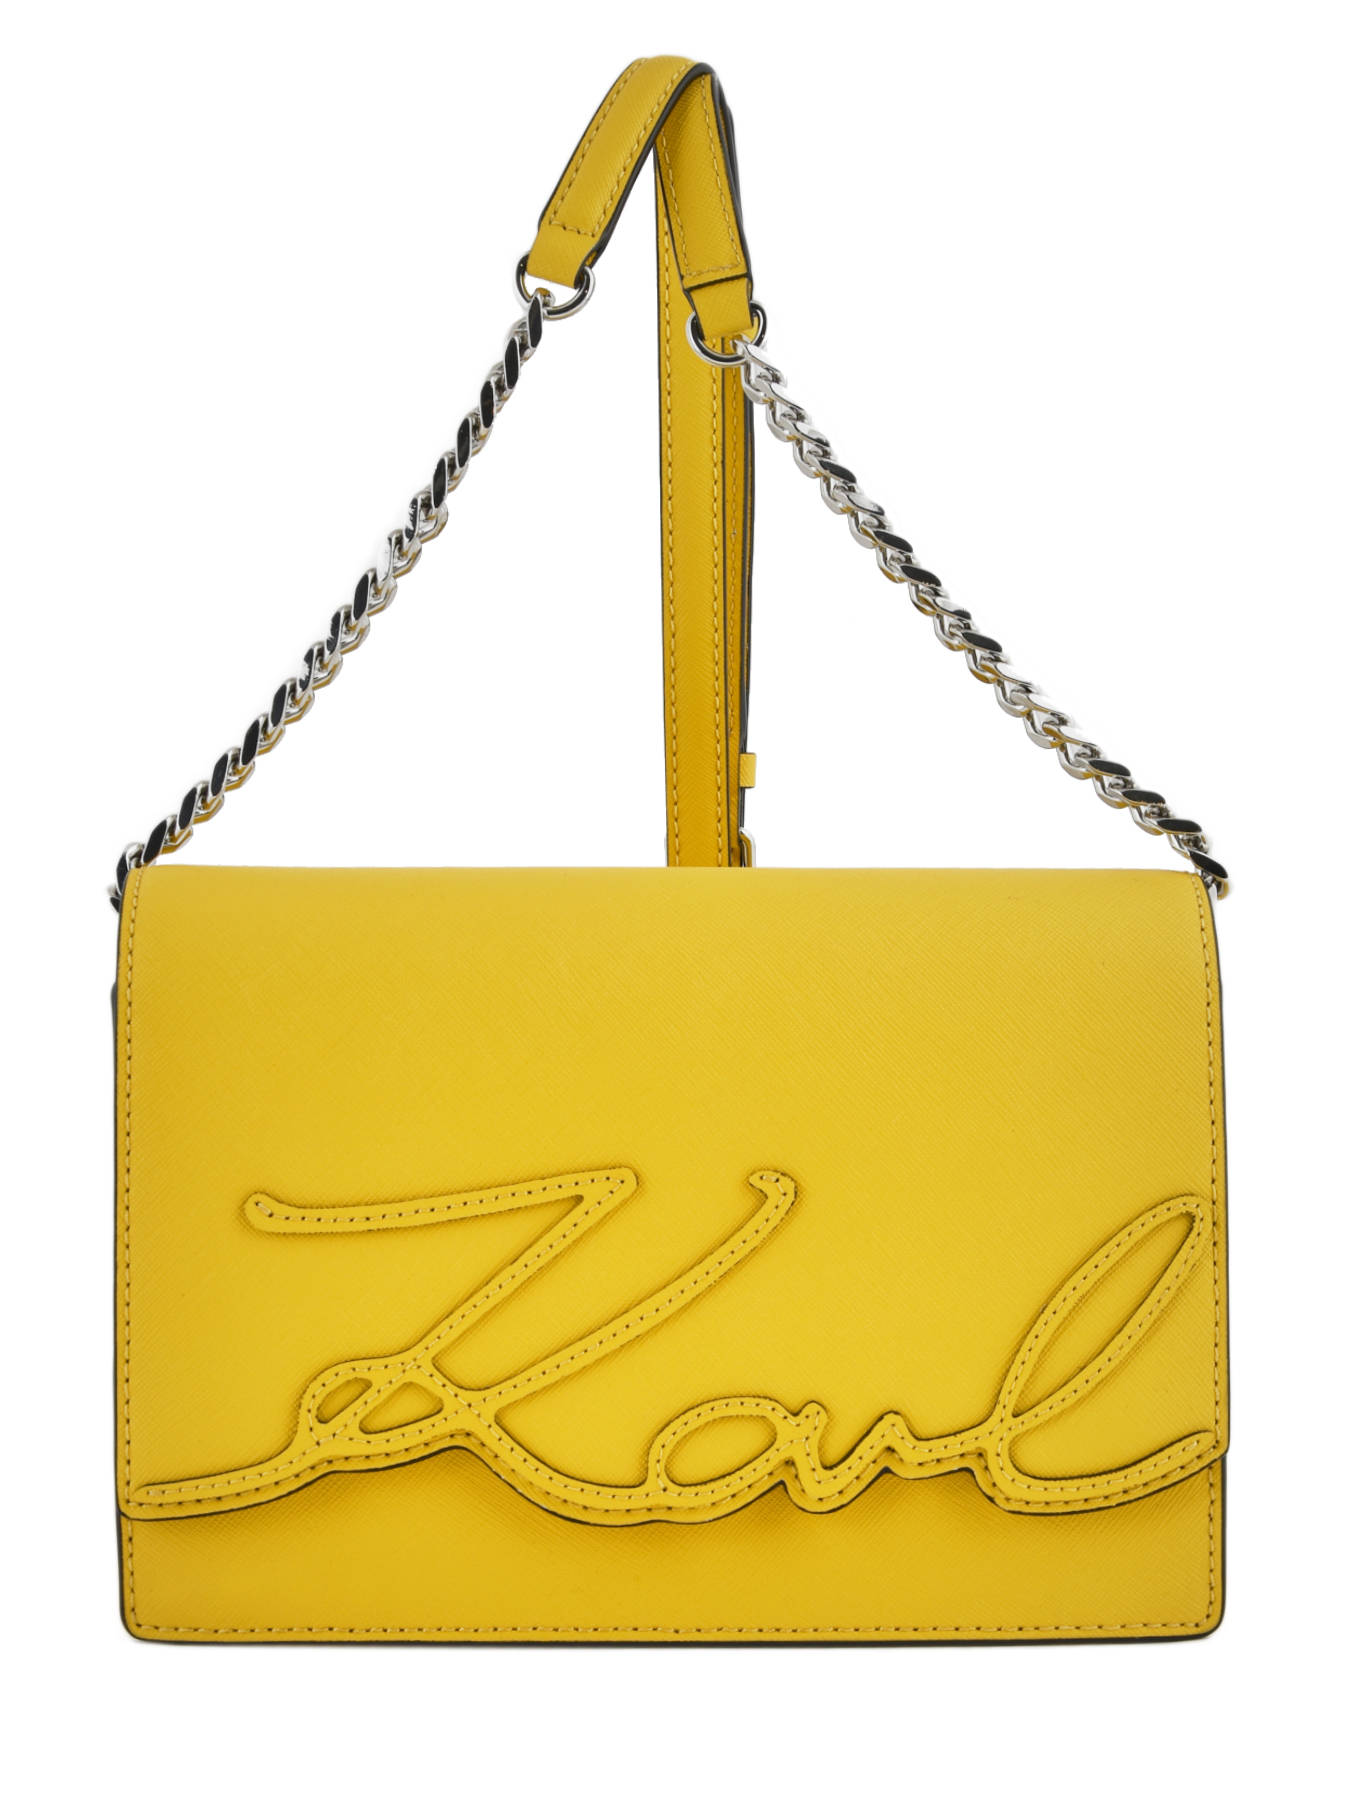 Karl Lagerfeld Bag K signature essential - Best prices